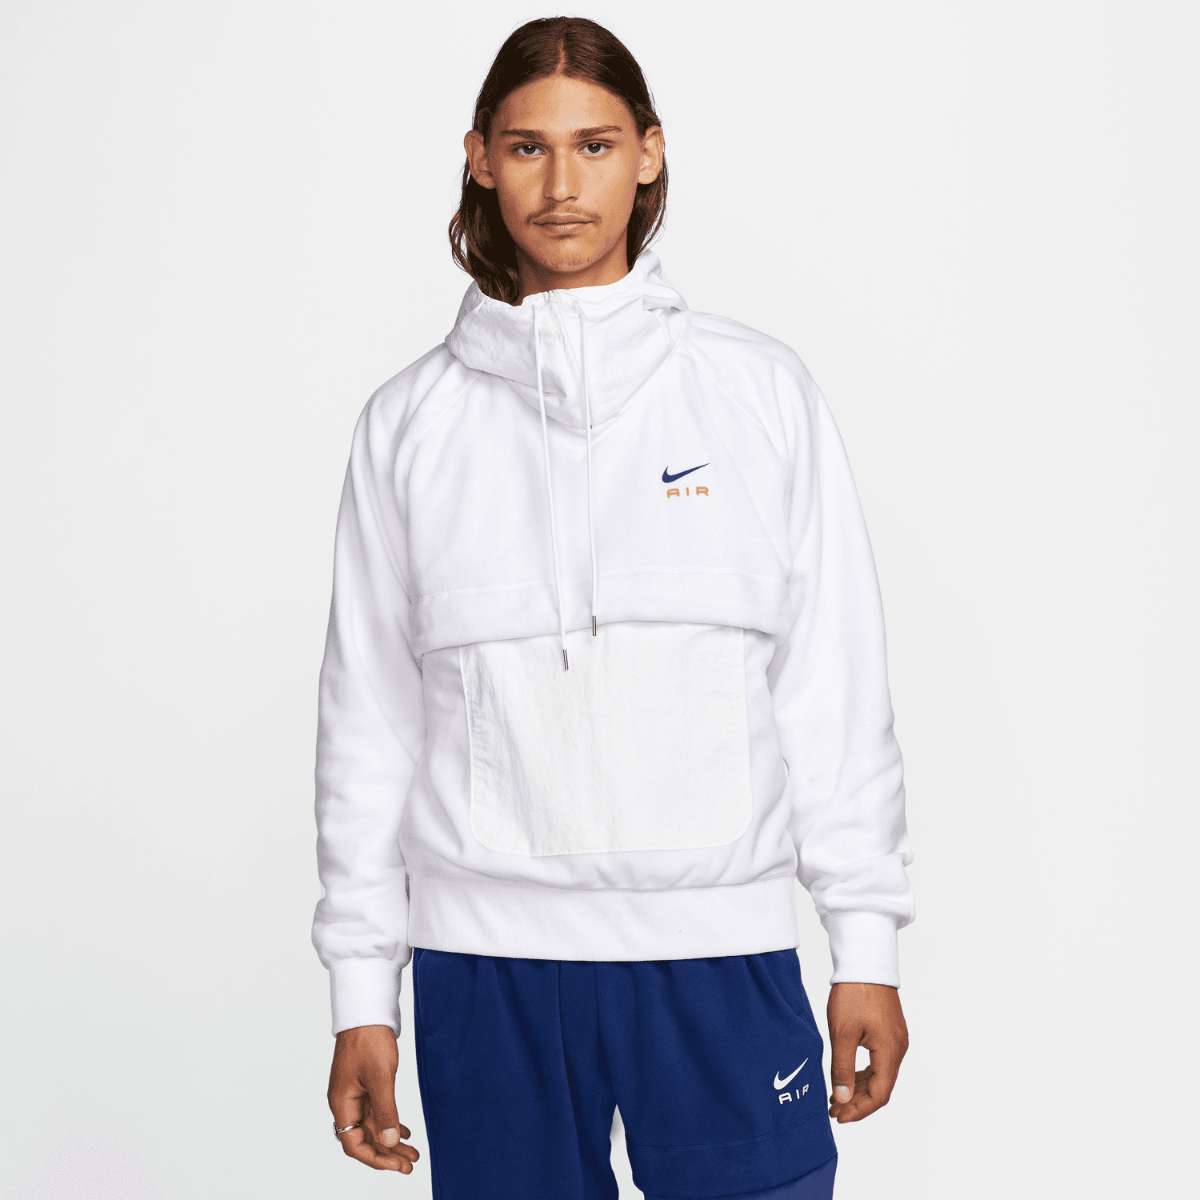 Sweat-shirt enfant Nike molleton - Sweat capuche junior bleu marine